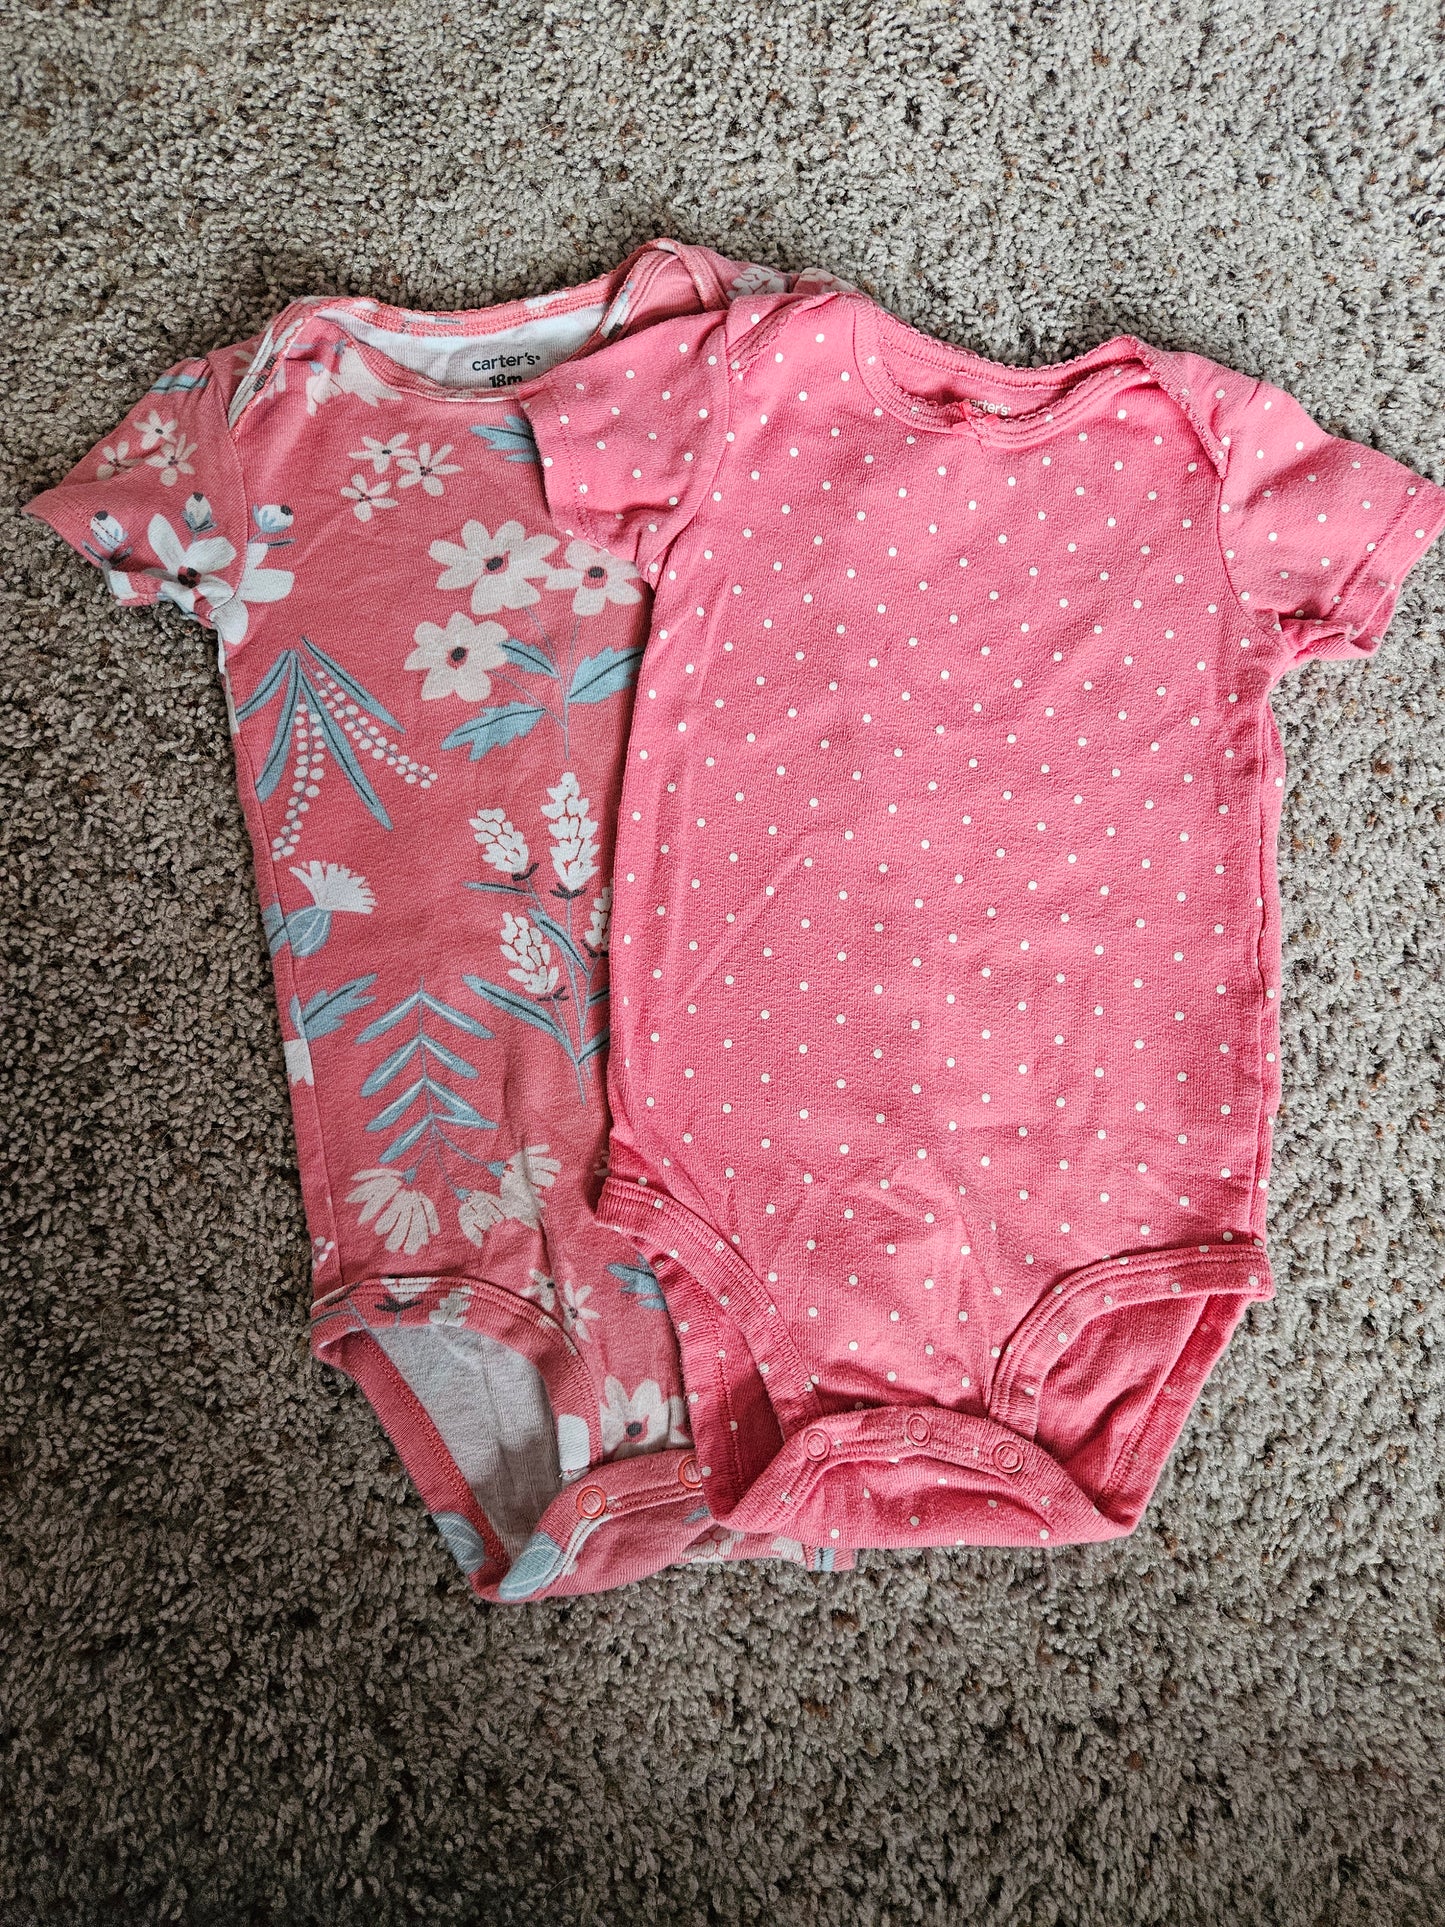 18 month short-sleeve onesie bundle